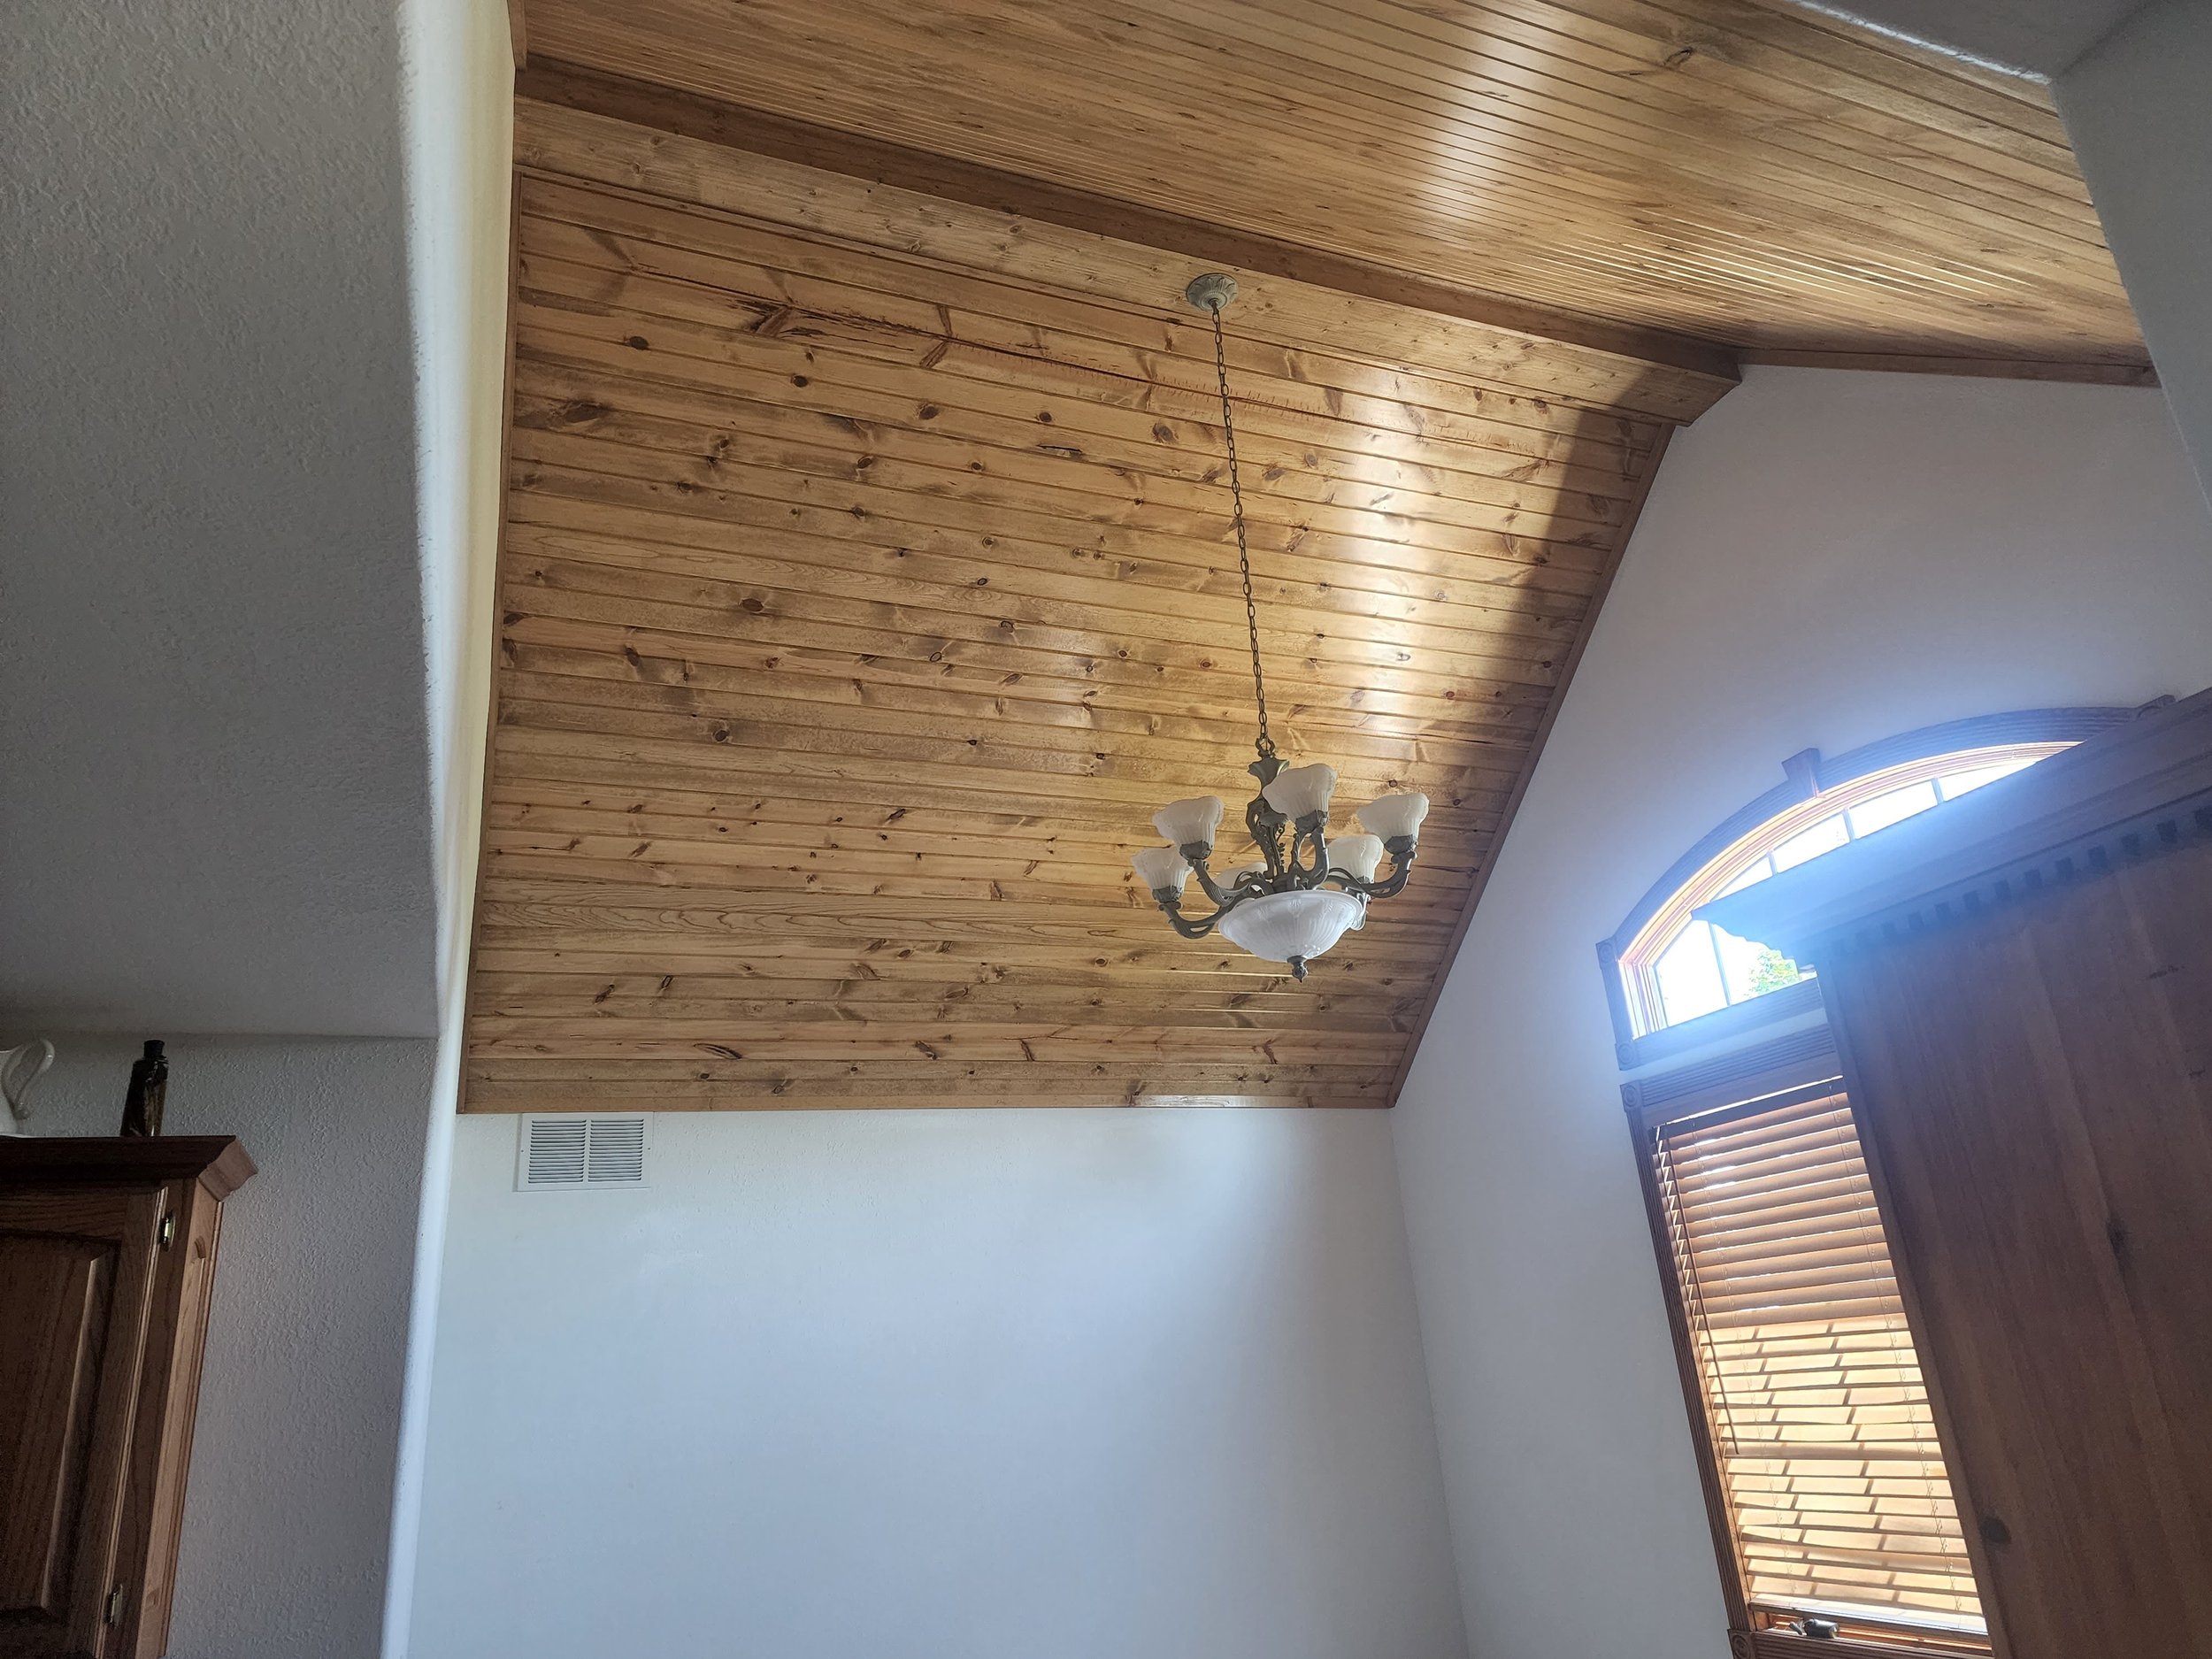  cedar planks added to vaulted ceiling 